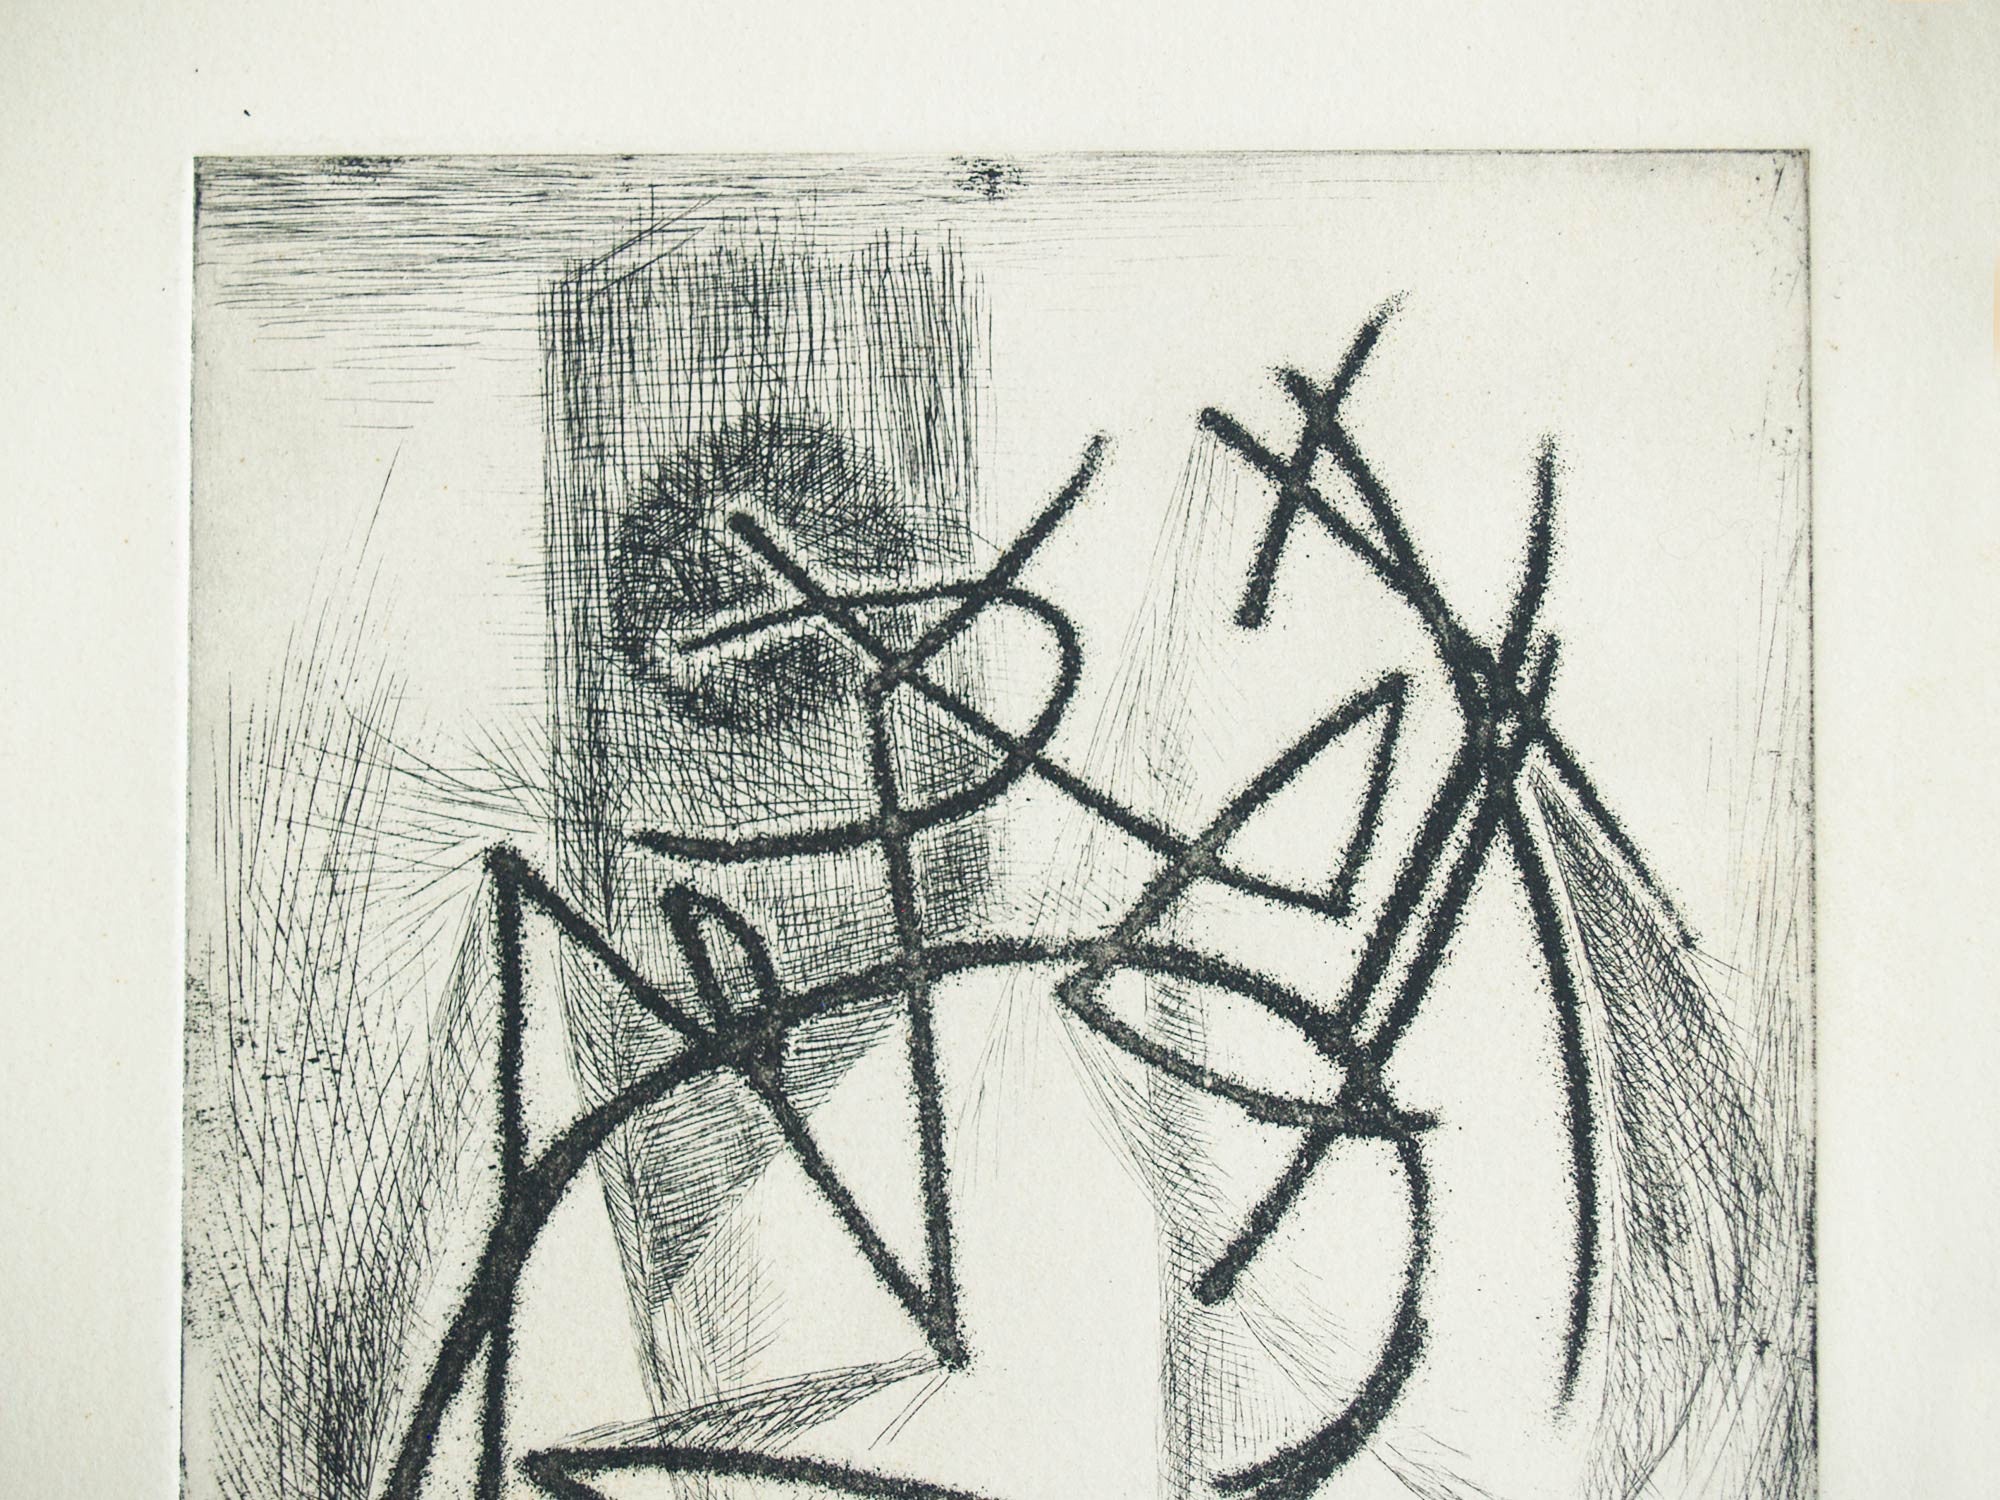 Eau-forte abstraction d’Henri Goetz, France (1951)..Abstraction Aquaforte Etching by Henri Goetz, France (1951)